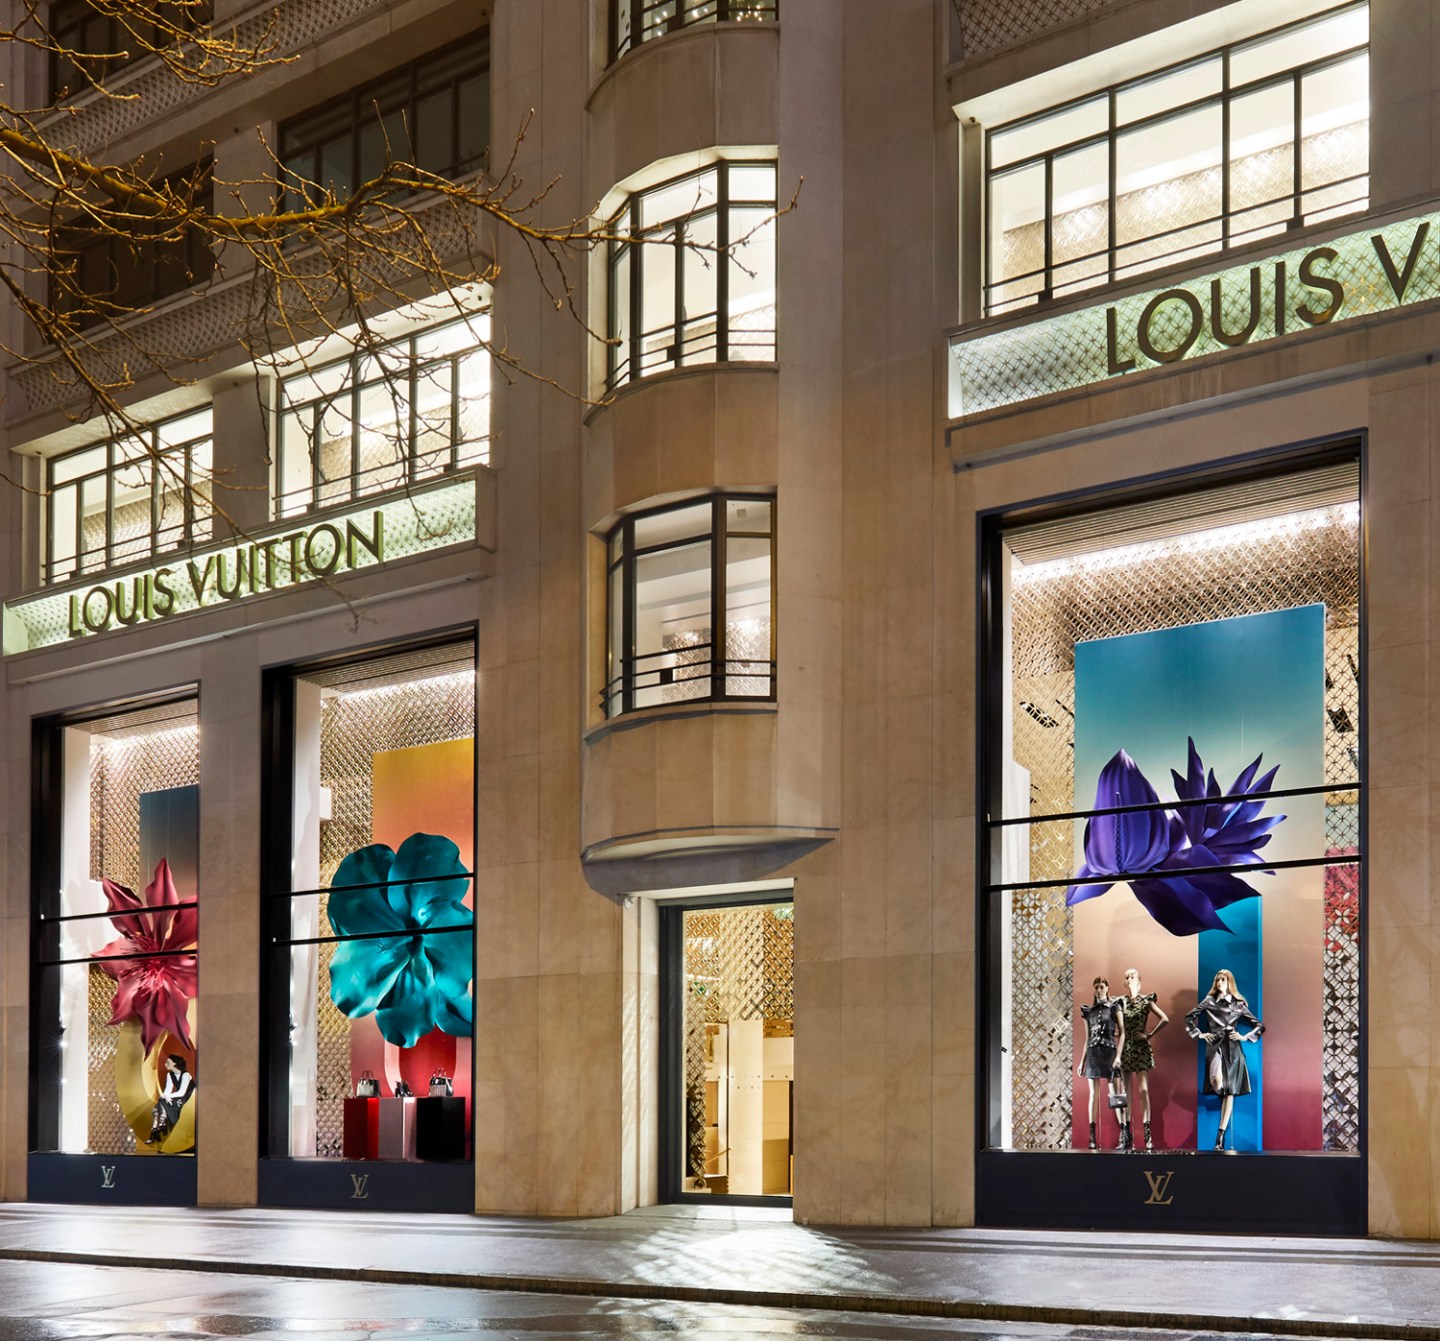 Faye Mcleod on Instagram: “Louis Vuitton Shibuya men's only store